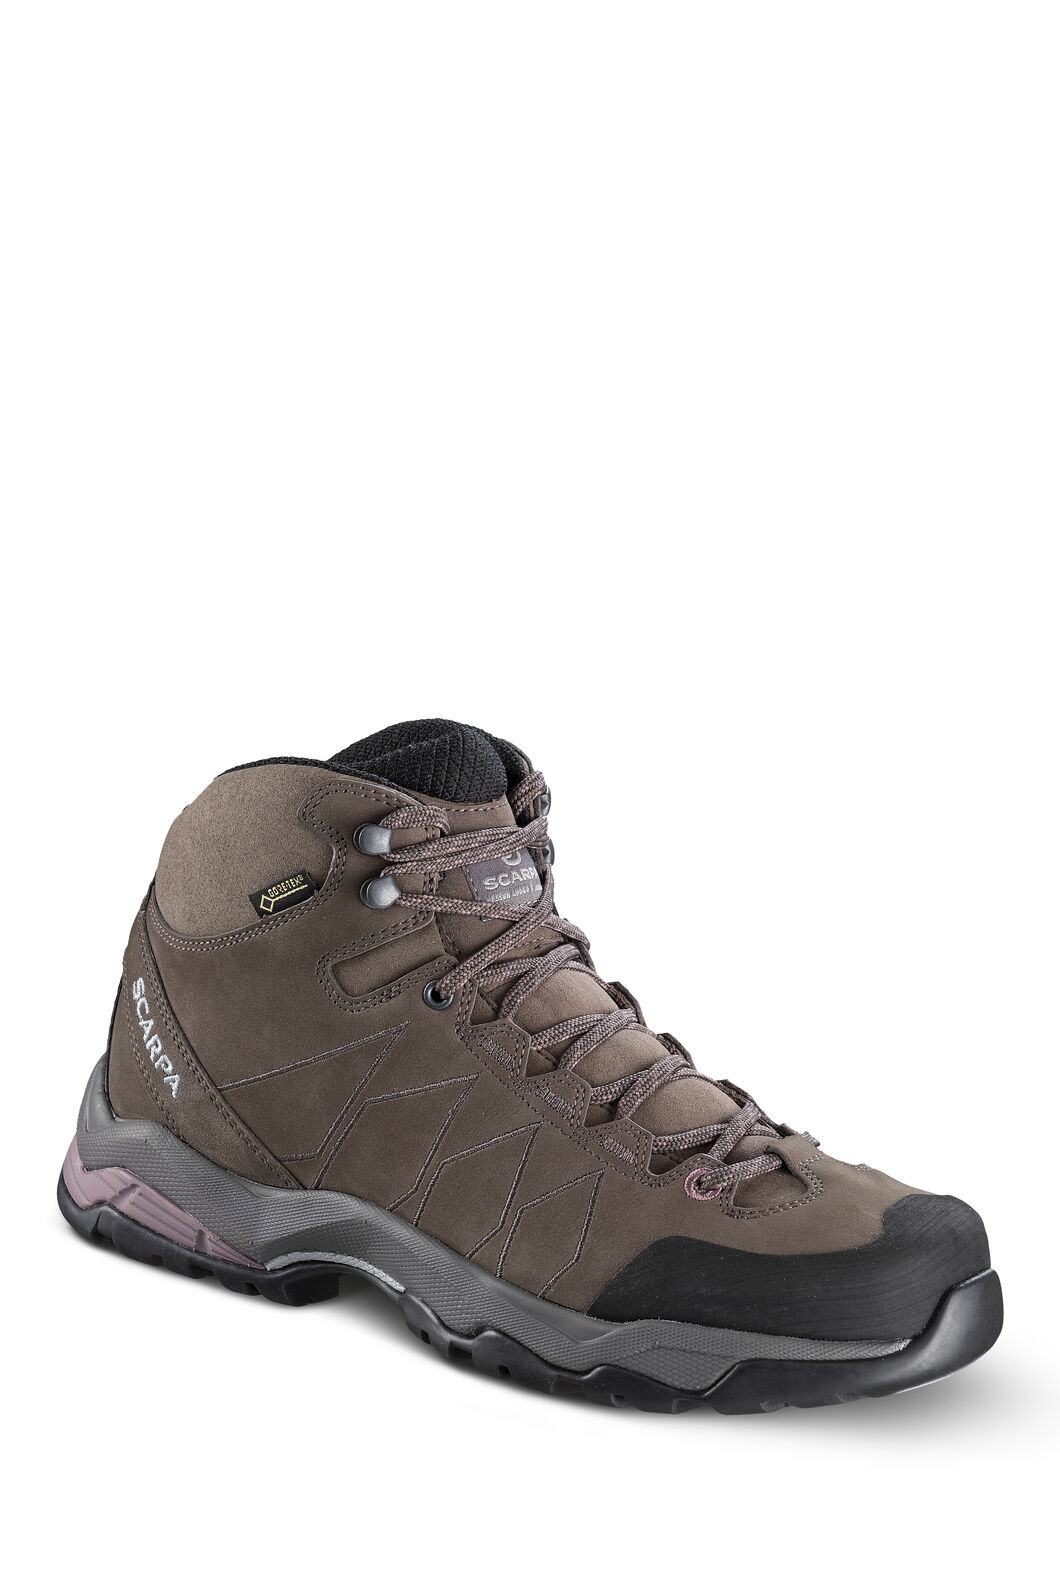 Scarpa Moraine Plus GTX Hiking Boot — Women's | Macpac